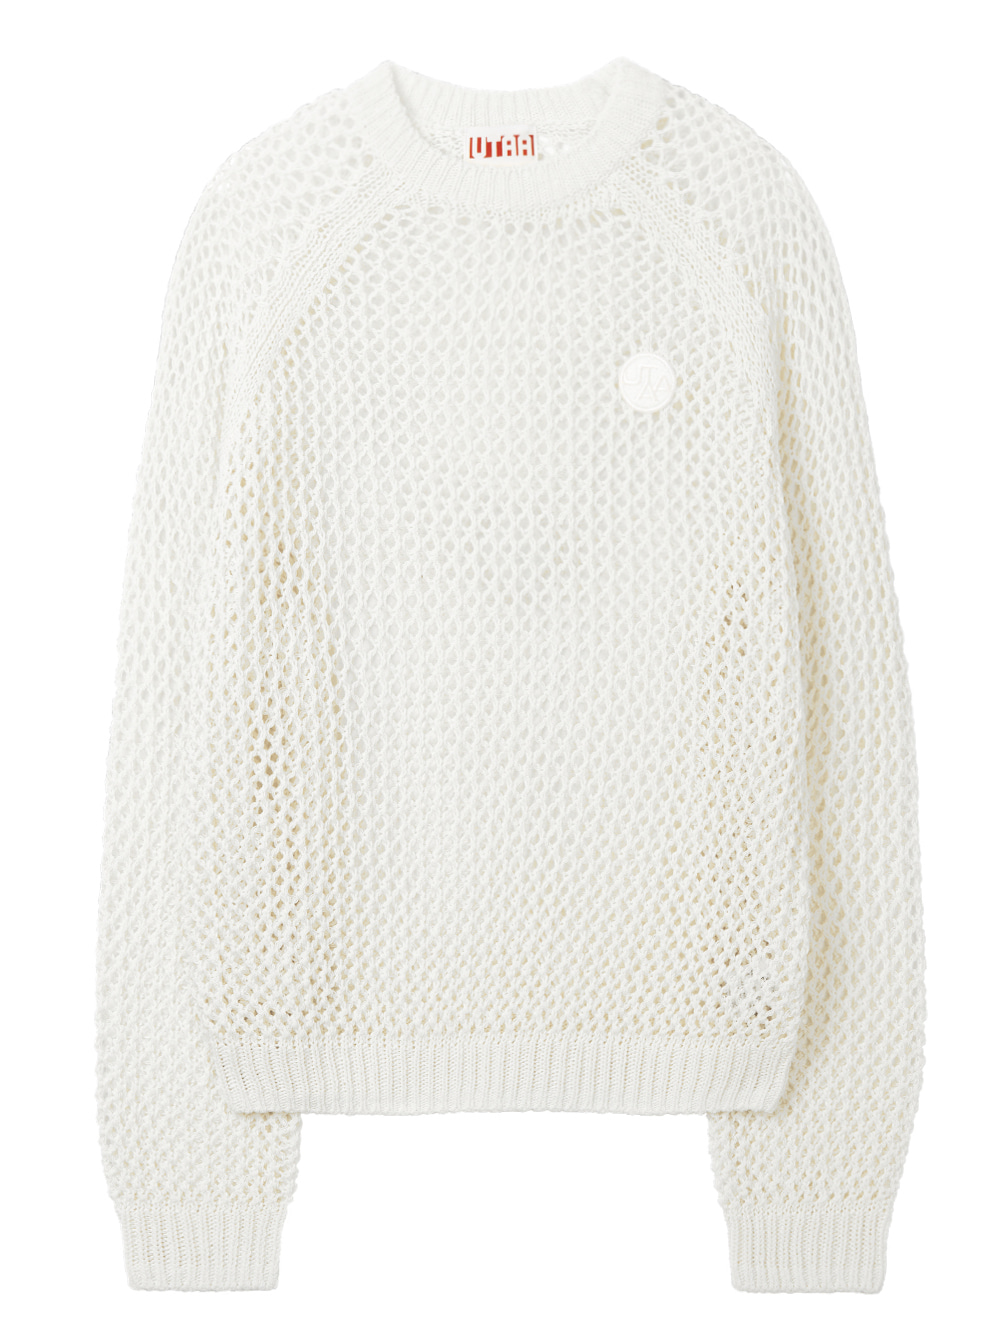 UTAA Crocher Scasi Raglan Knit : White (UB2KTF254WH)